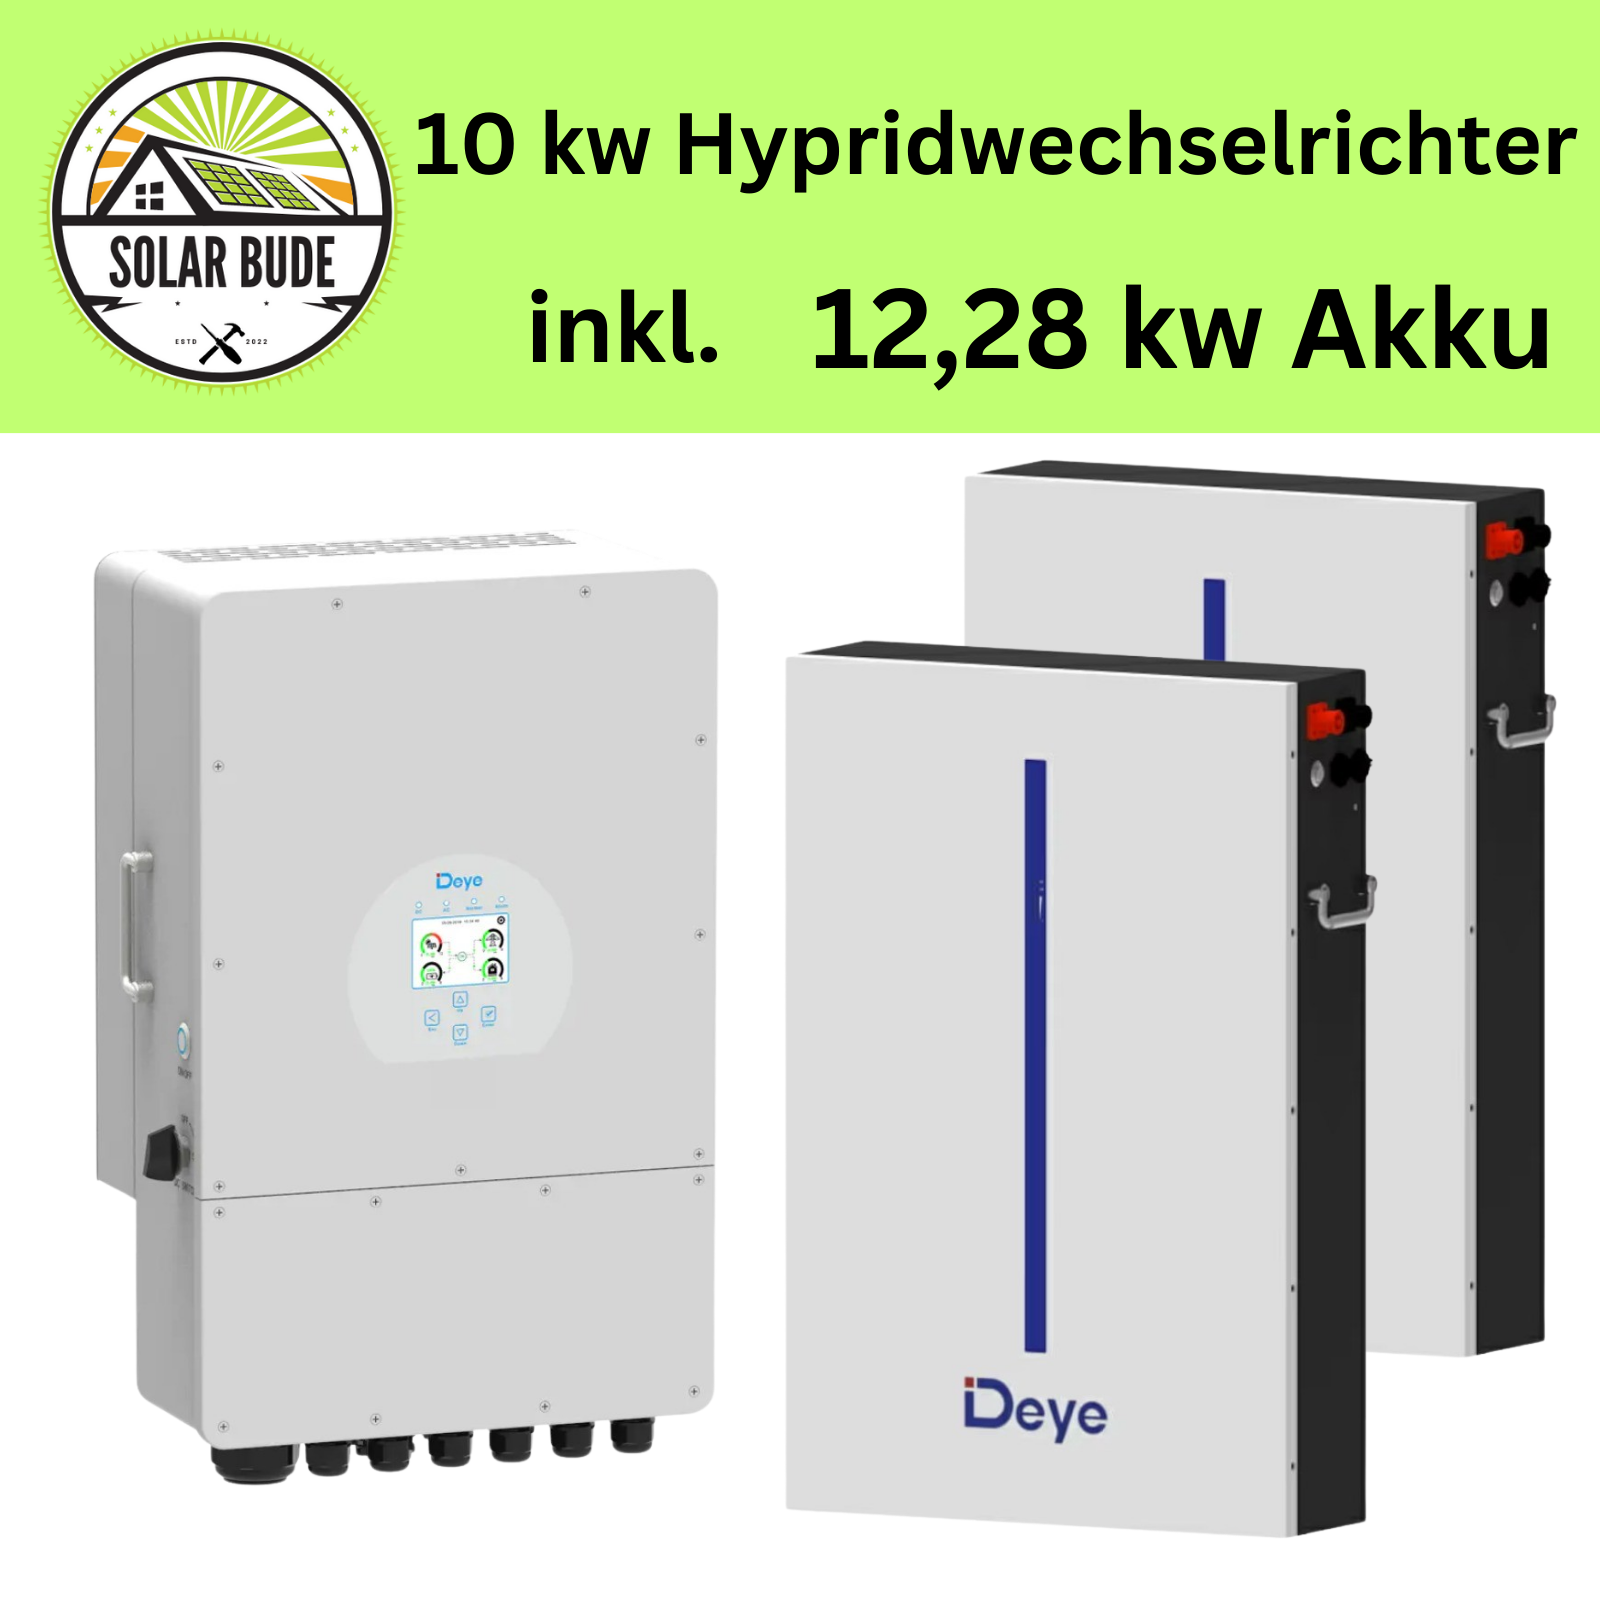 Deye 10 KW Hybrid Wechselrichter + Deye Batterie Speicher Akku – Solar Bude